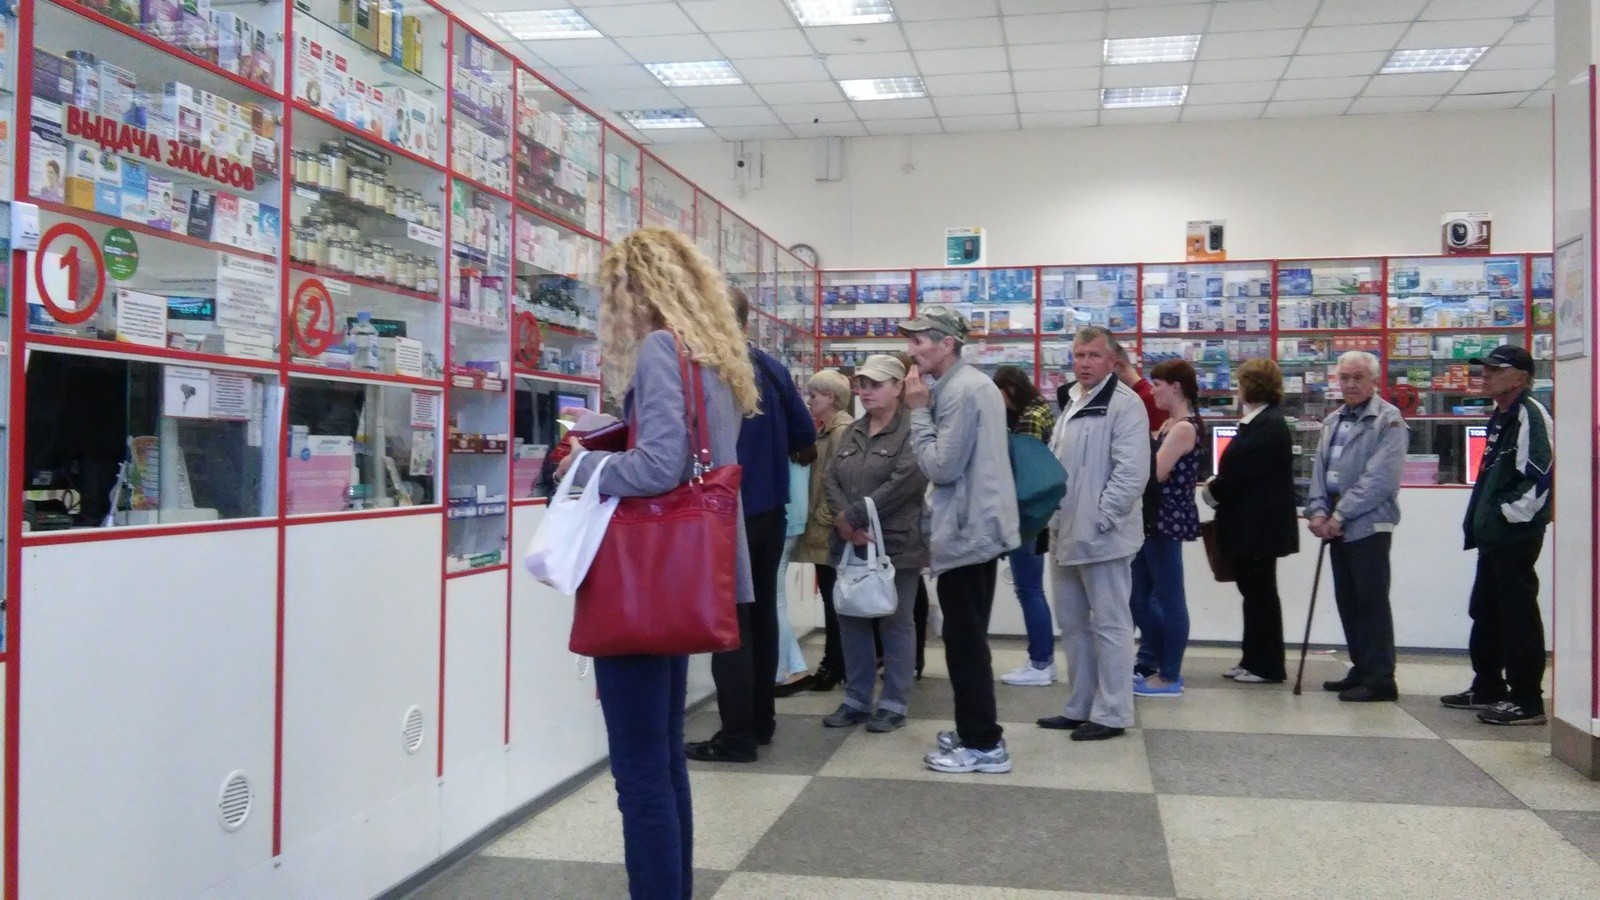 Аптека Красная Цена Ульяновск